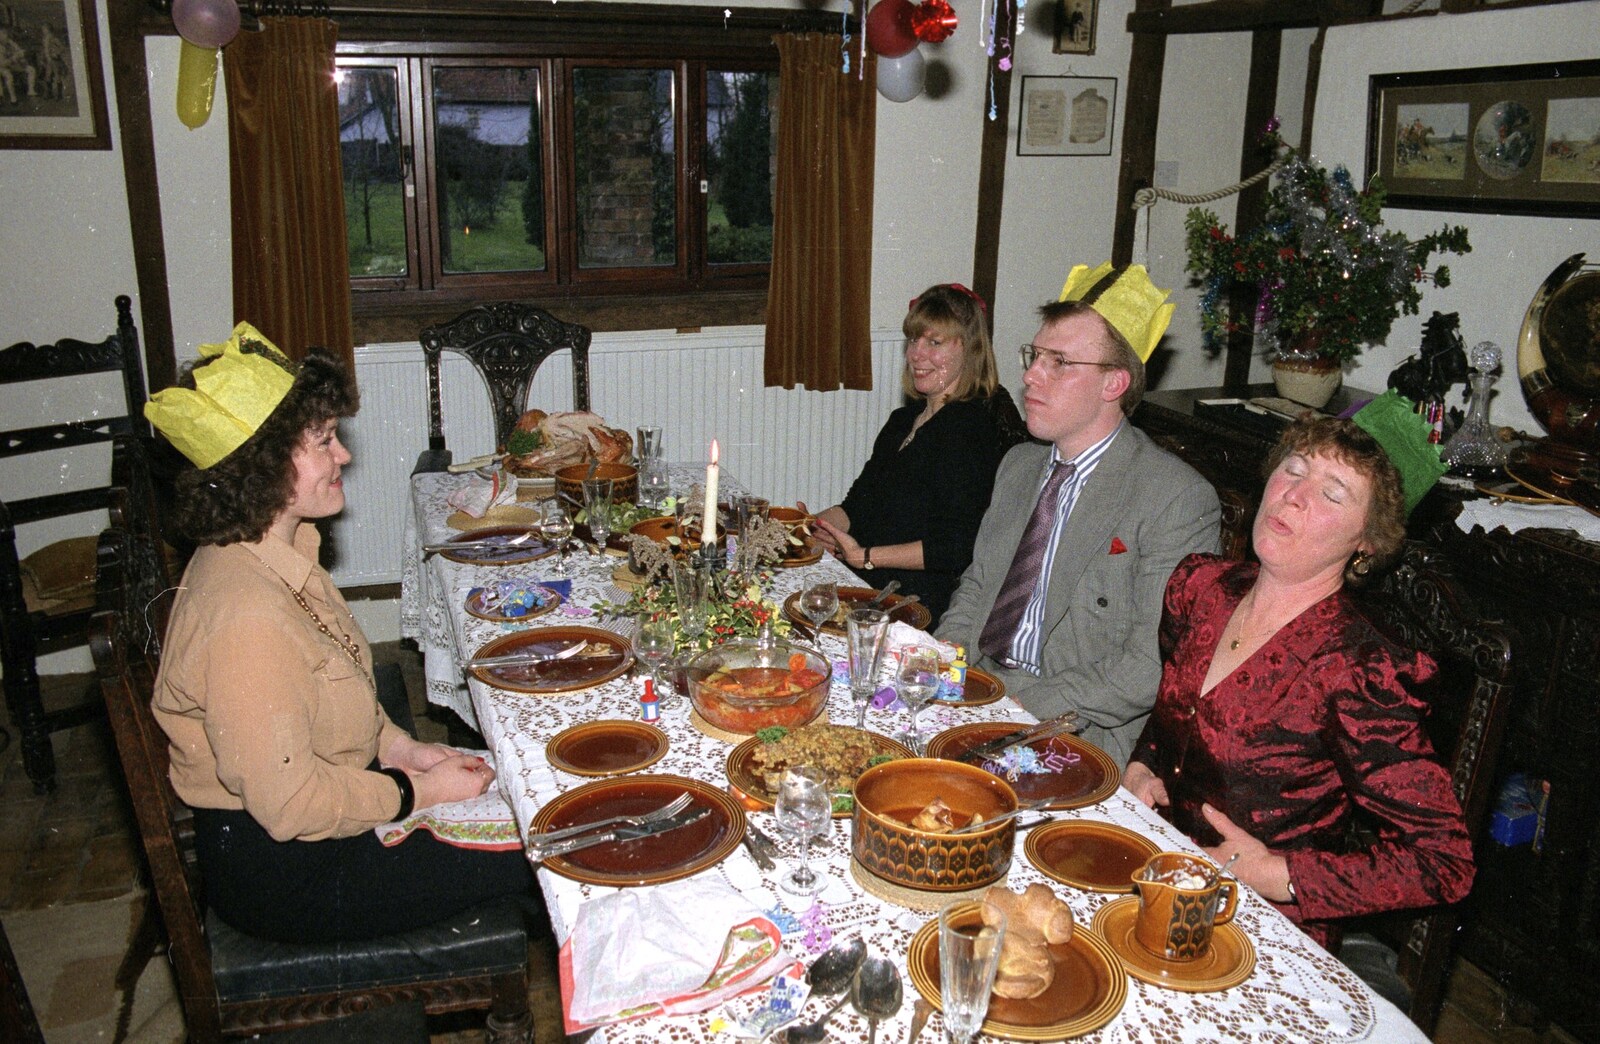 Brenda's a bit stuffed from Christmas Dinner with Geoff and Brenda, Stuston, Suffolk - 25th December 1990